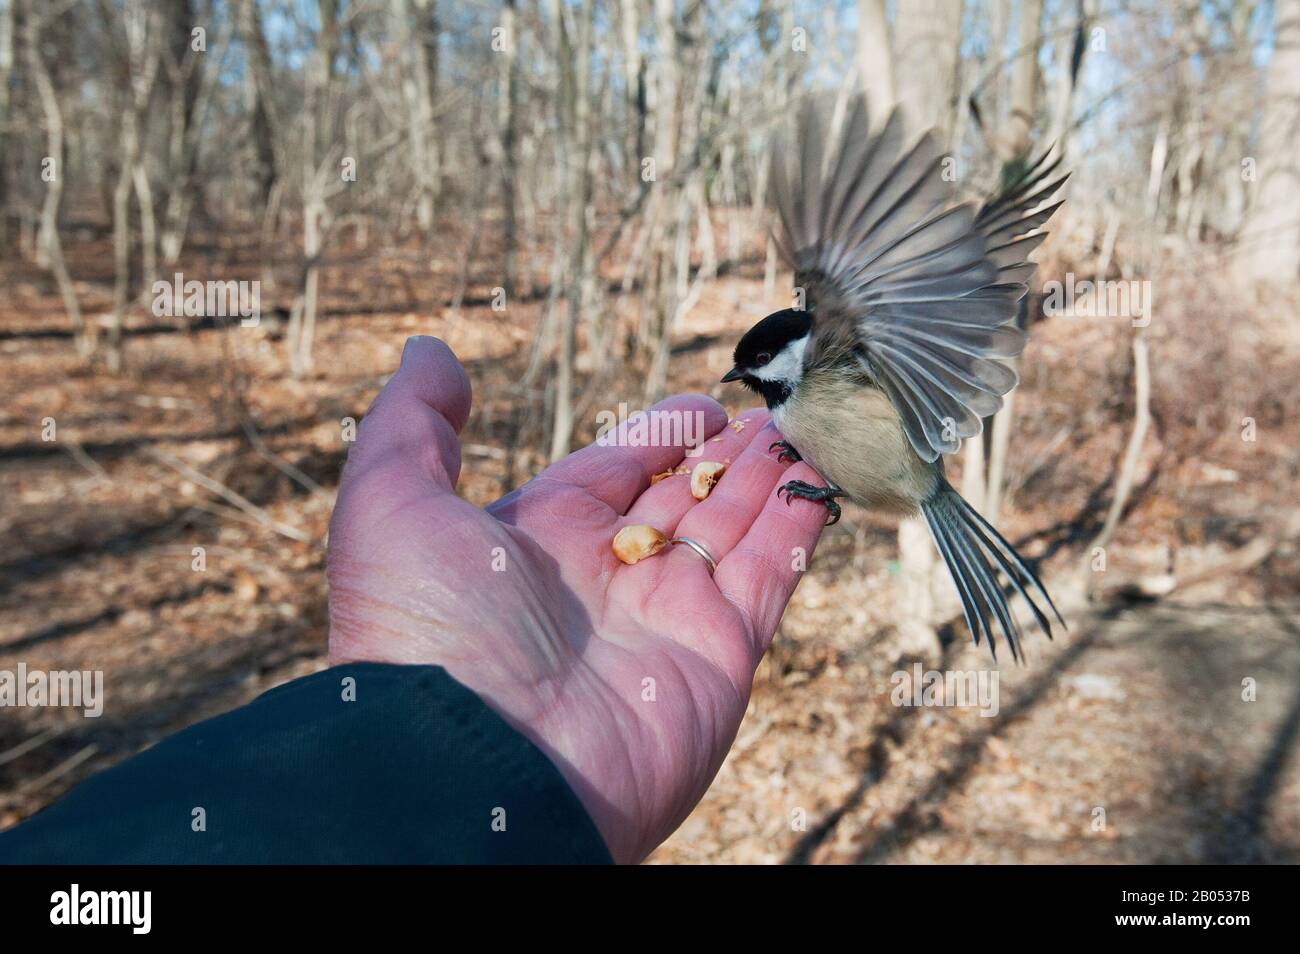 Black-capped chickadee feeding at person's hand Stock Photo